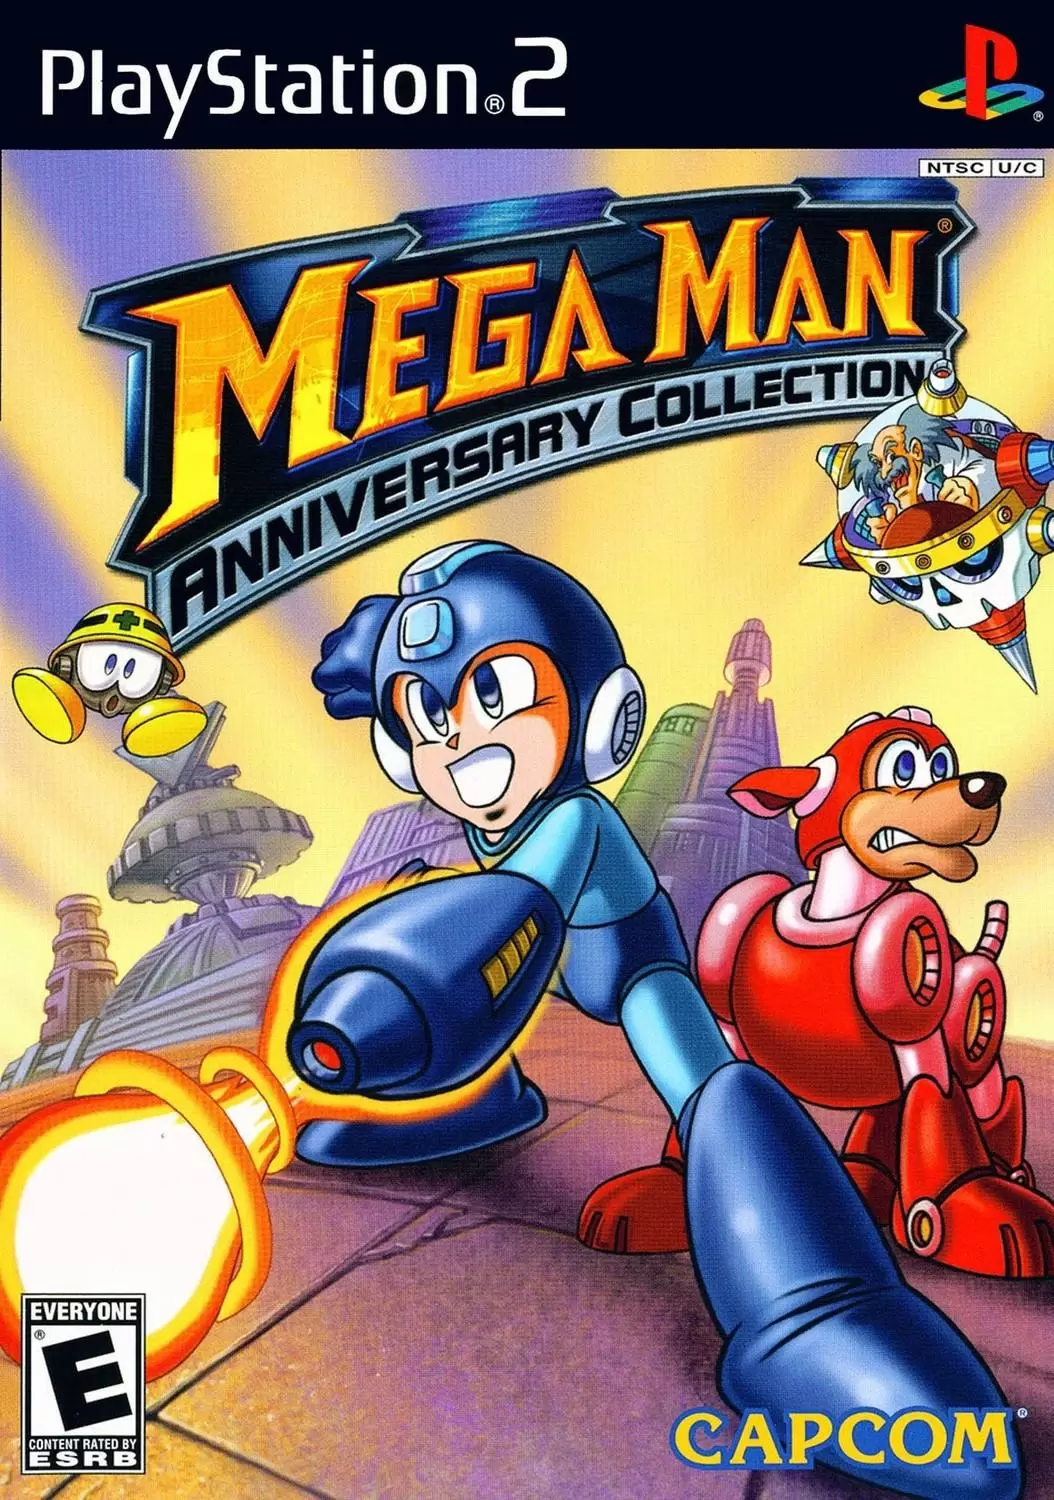 PS2 Games - Mega Man Anniversary Collection